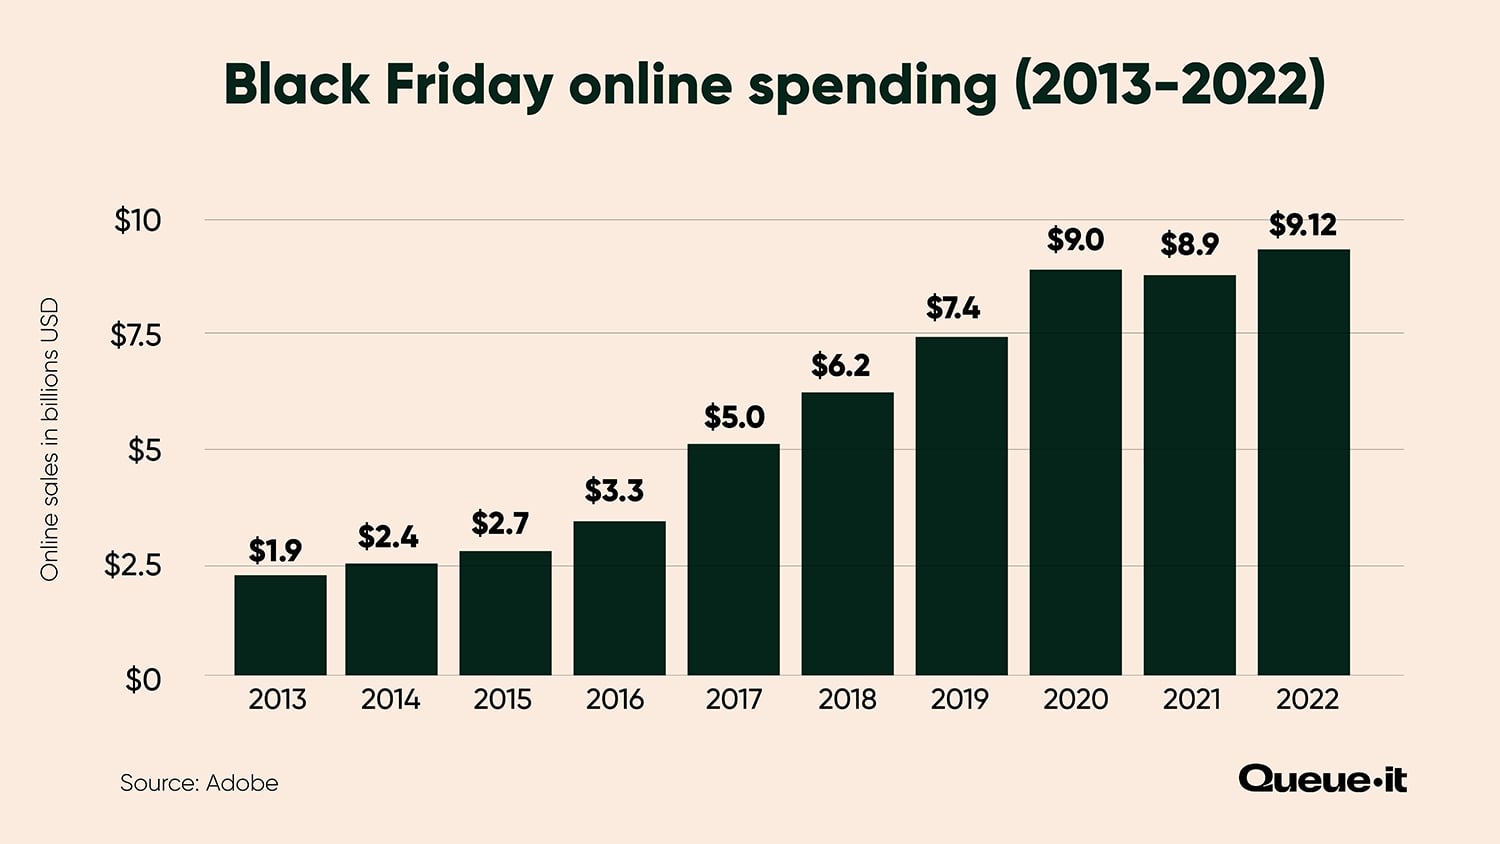 Black Friday sales volume online spending 2013-2023